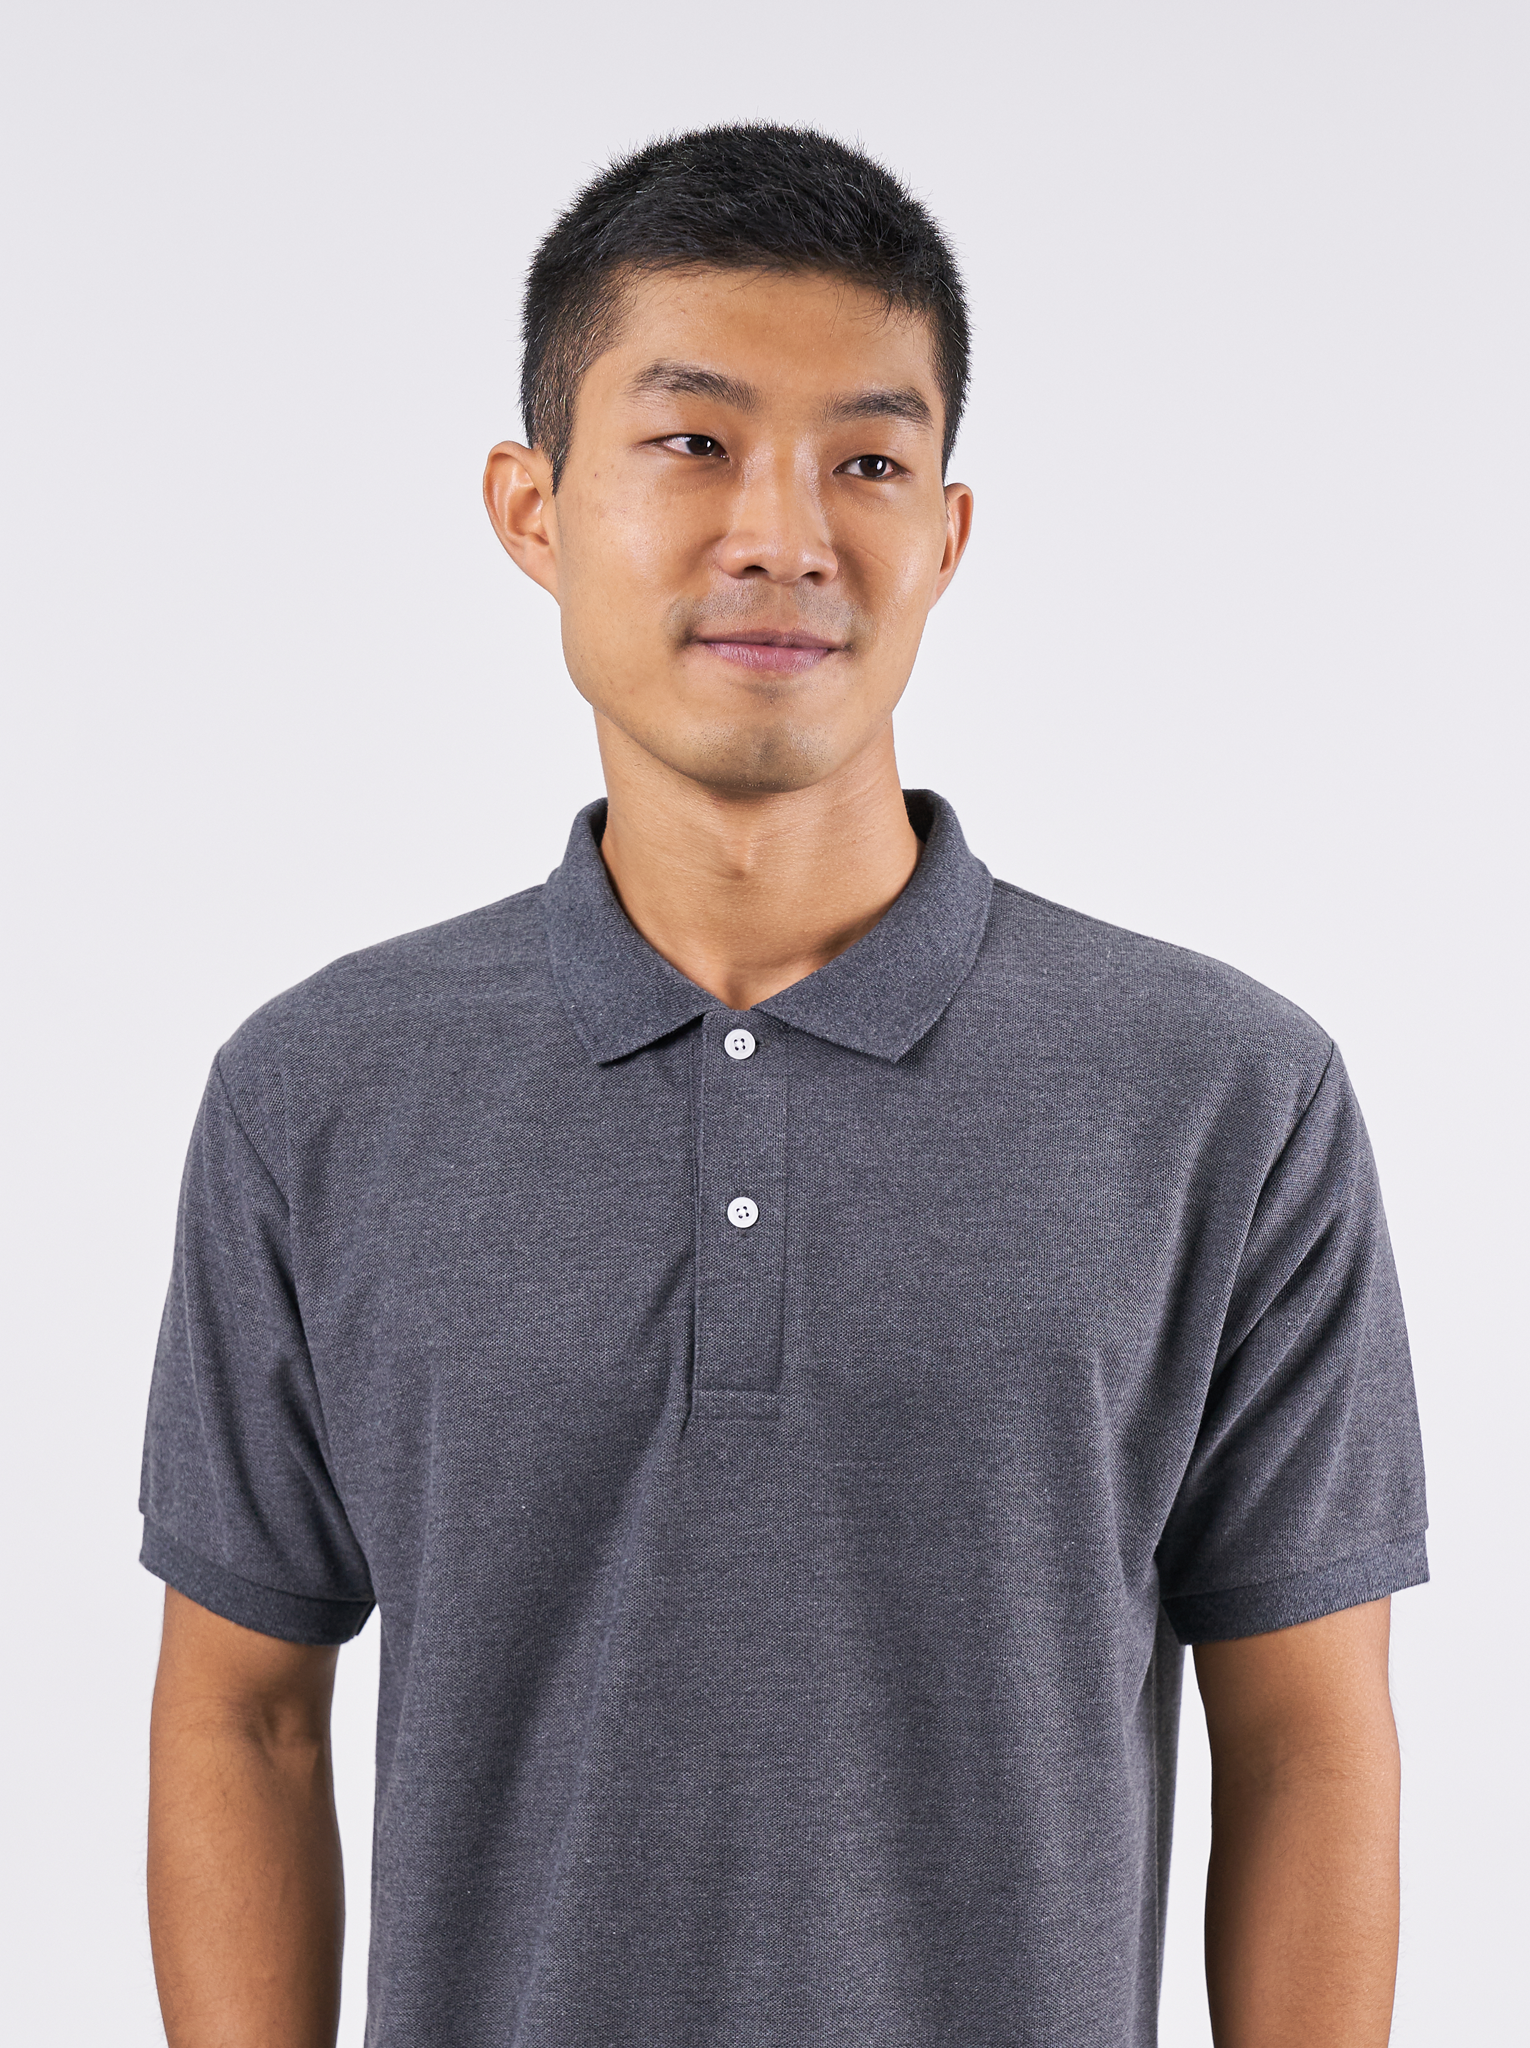 Polo Shirt เสื้อโปโล (Dark Grey, สีเทาเข้ม)(Unisex)